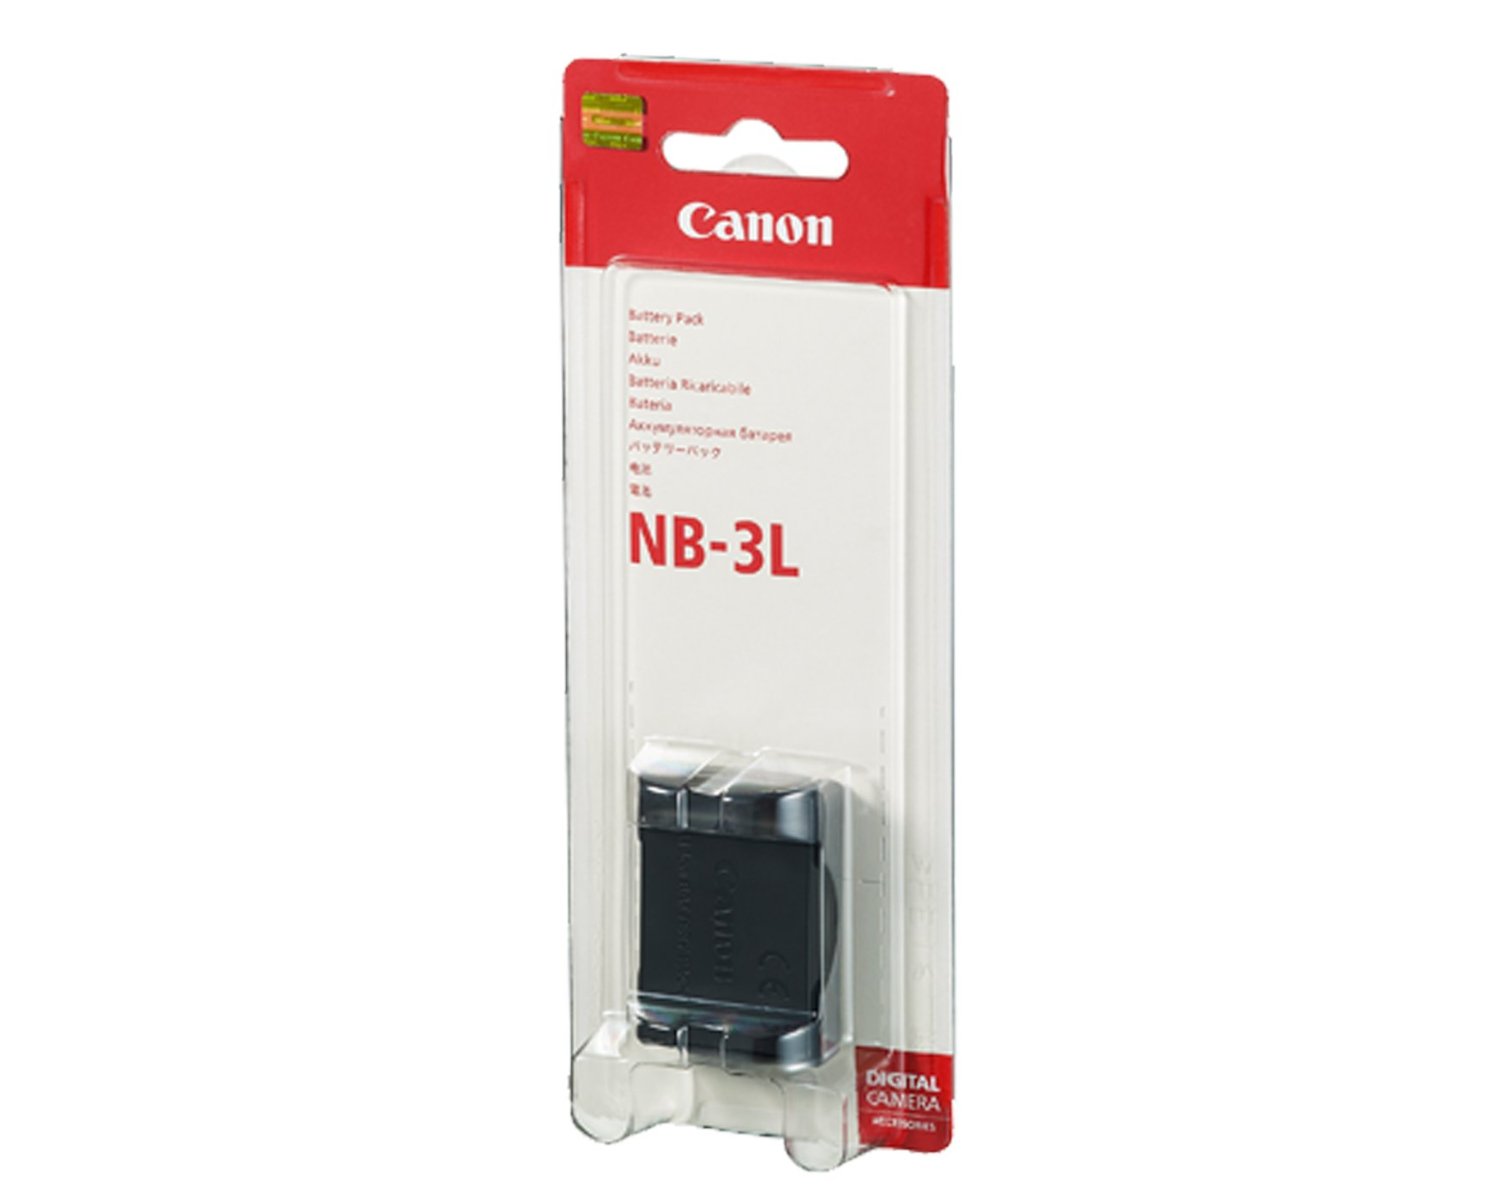 Canon batterie Pack NB - 3L